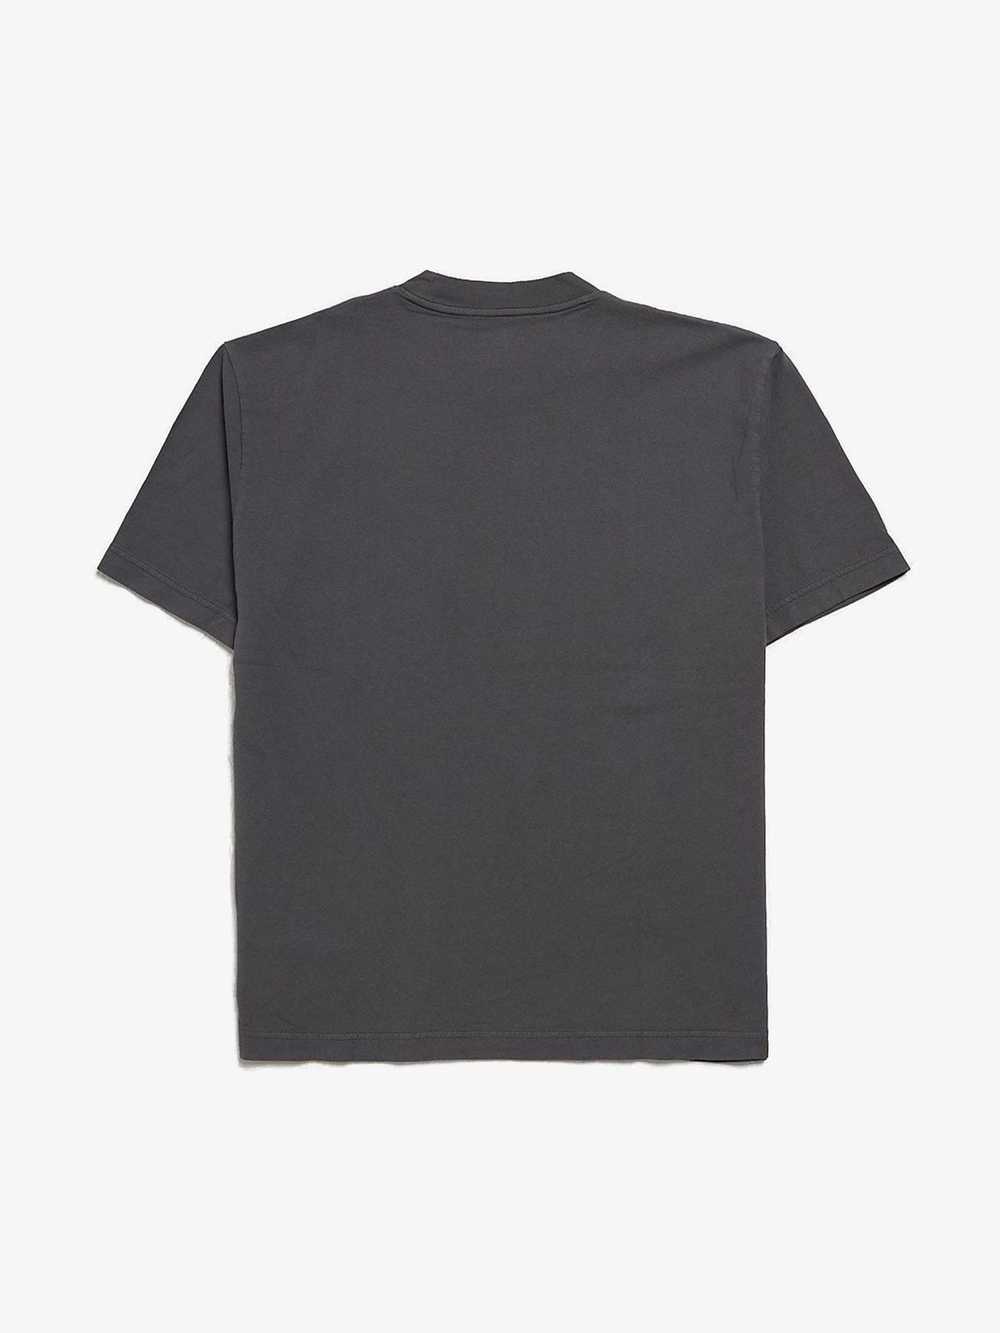 Yeezy Season Graphite Oversized T-Shirt - image 2